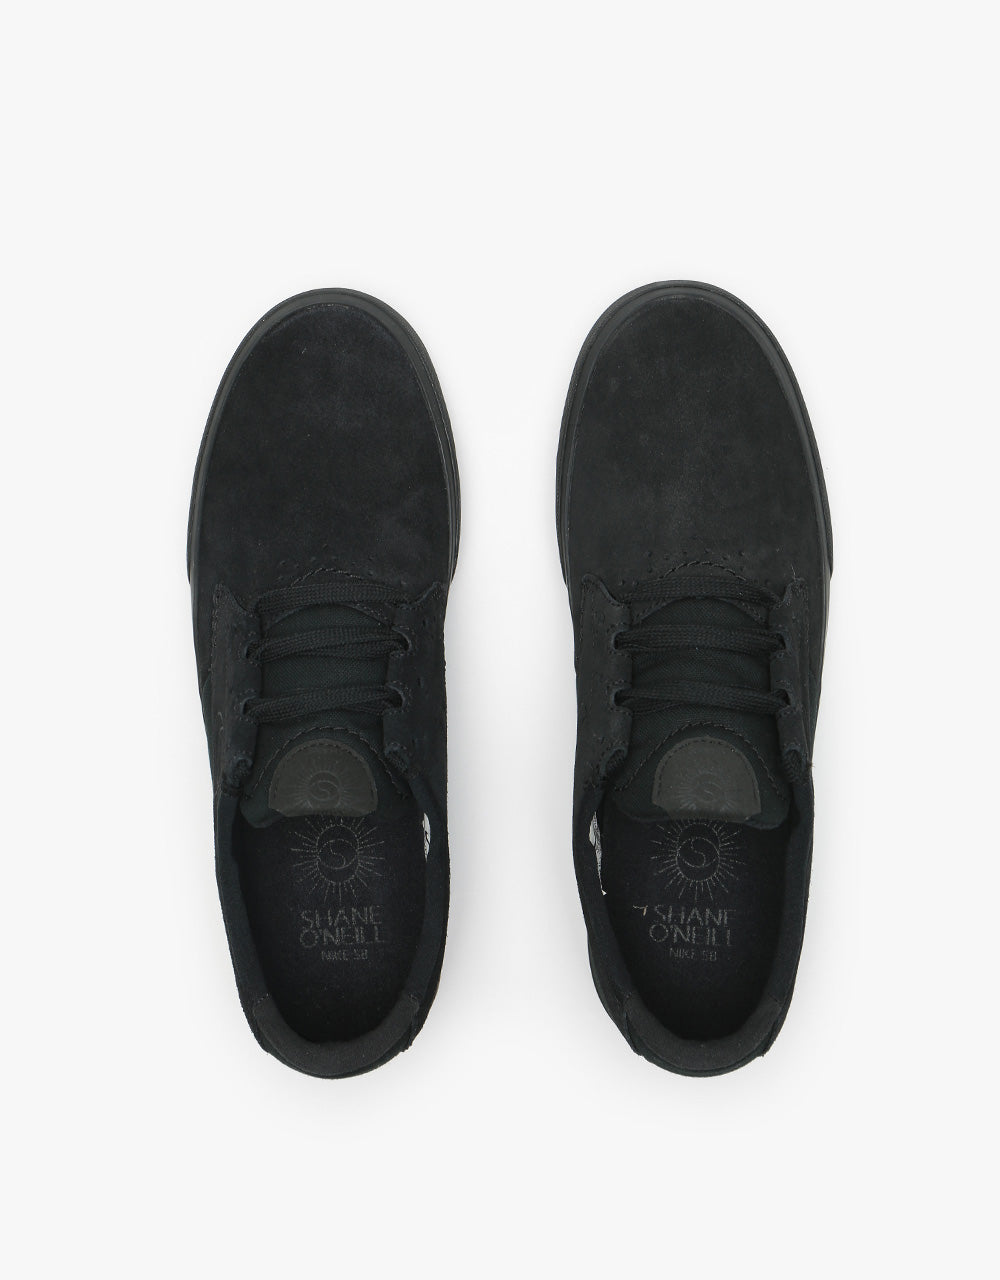 Nike SB Shane Skate Shoes - Black/Black-Black-Black